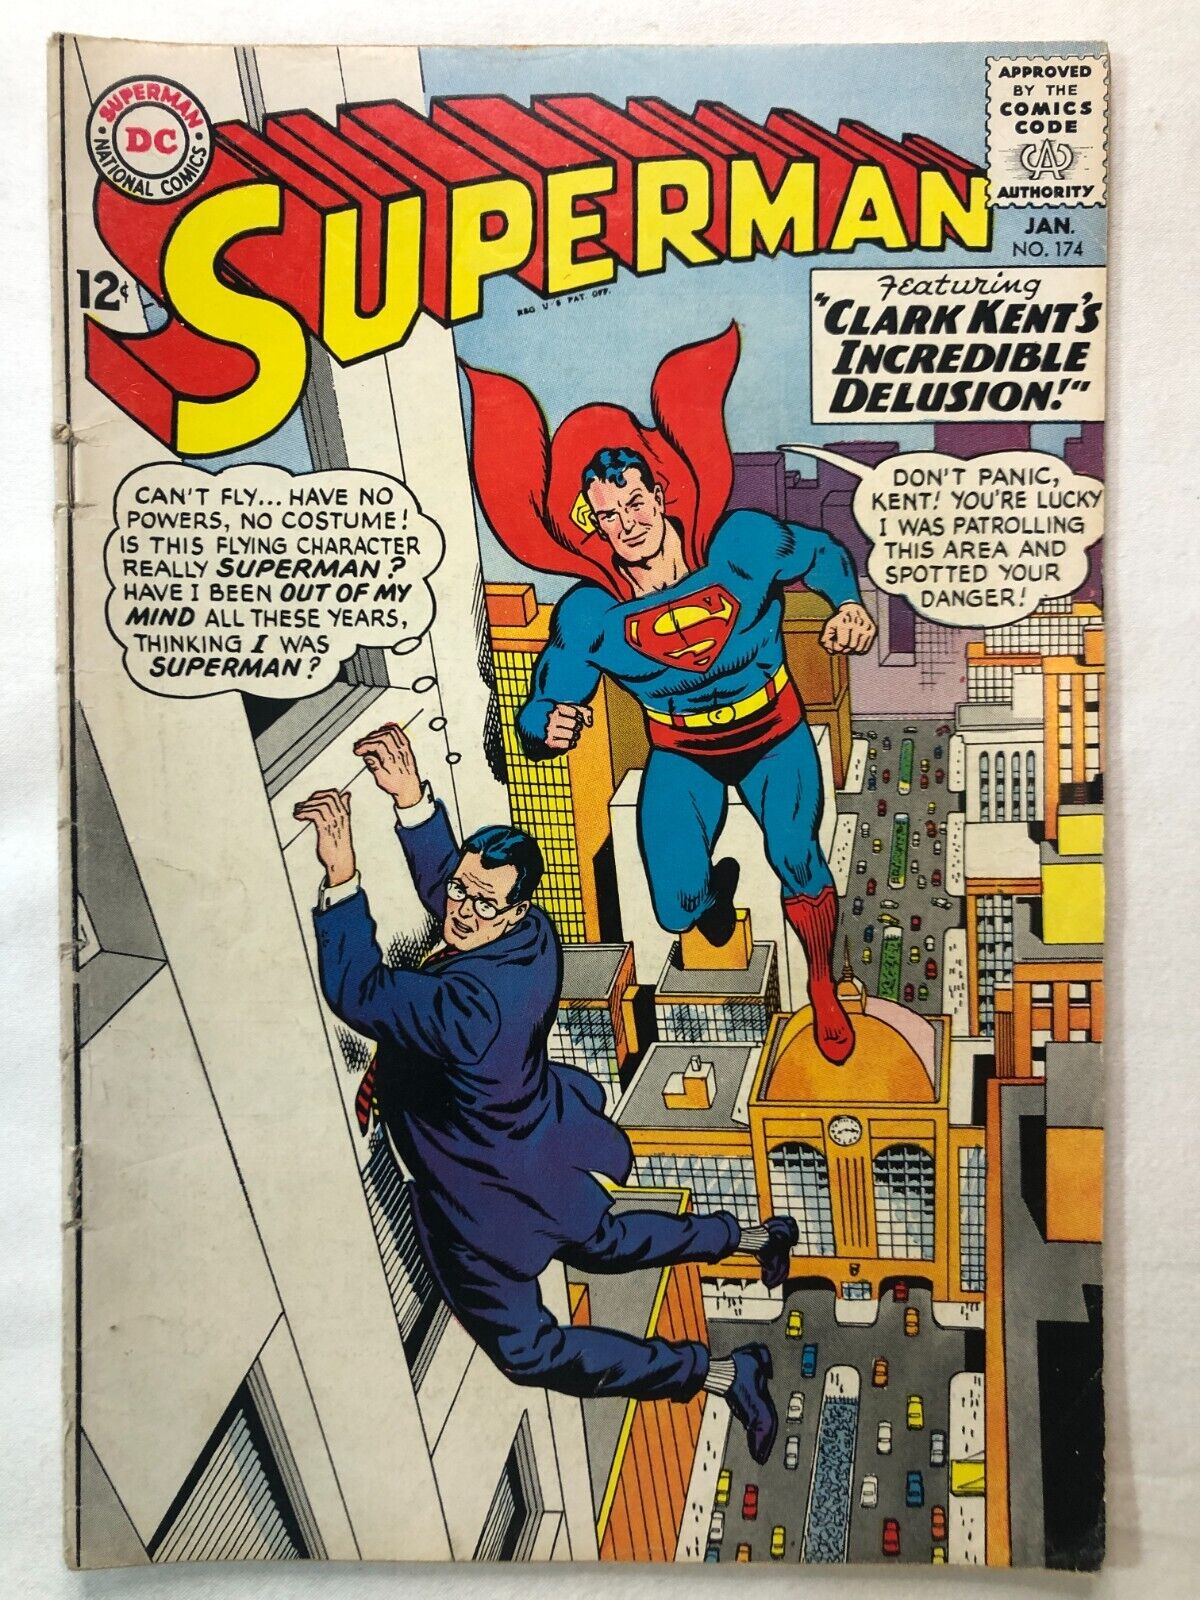 Superman #174 DC Comics January 1965 Nice Vintage Silver Age